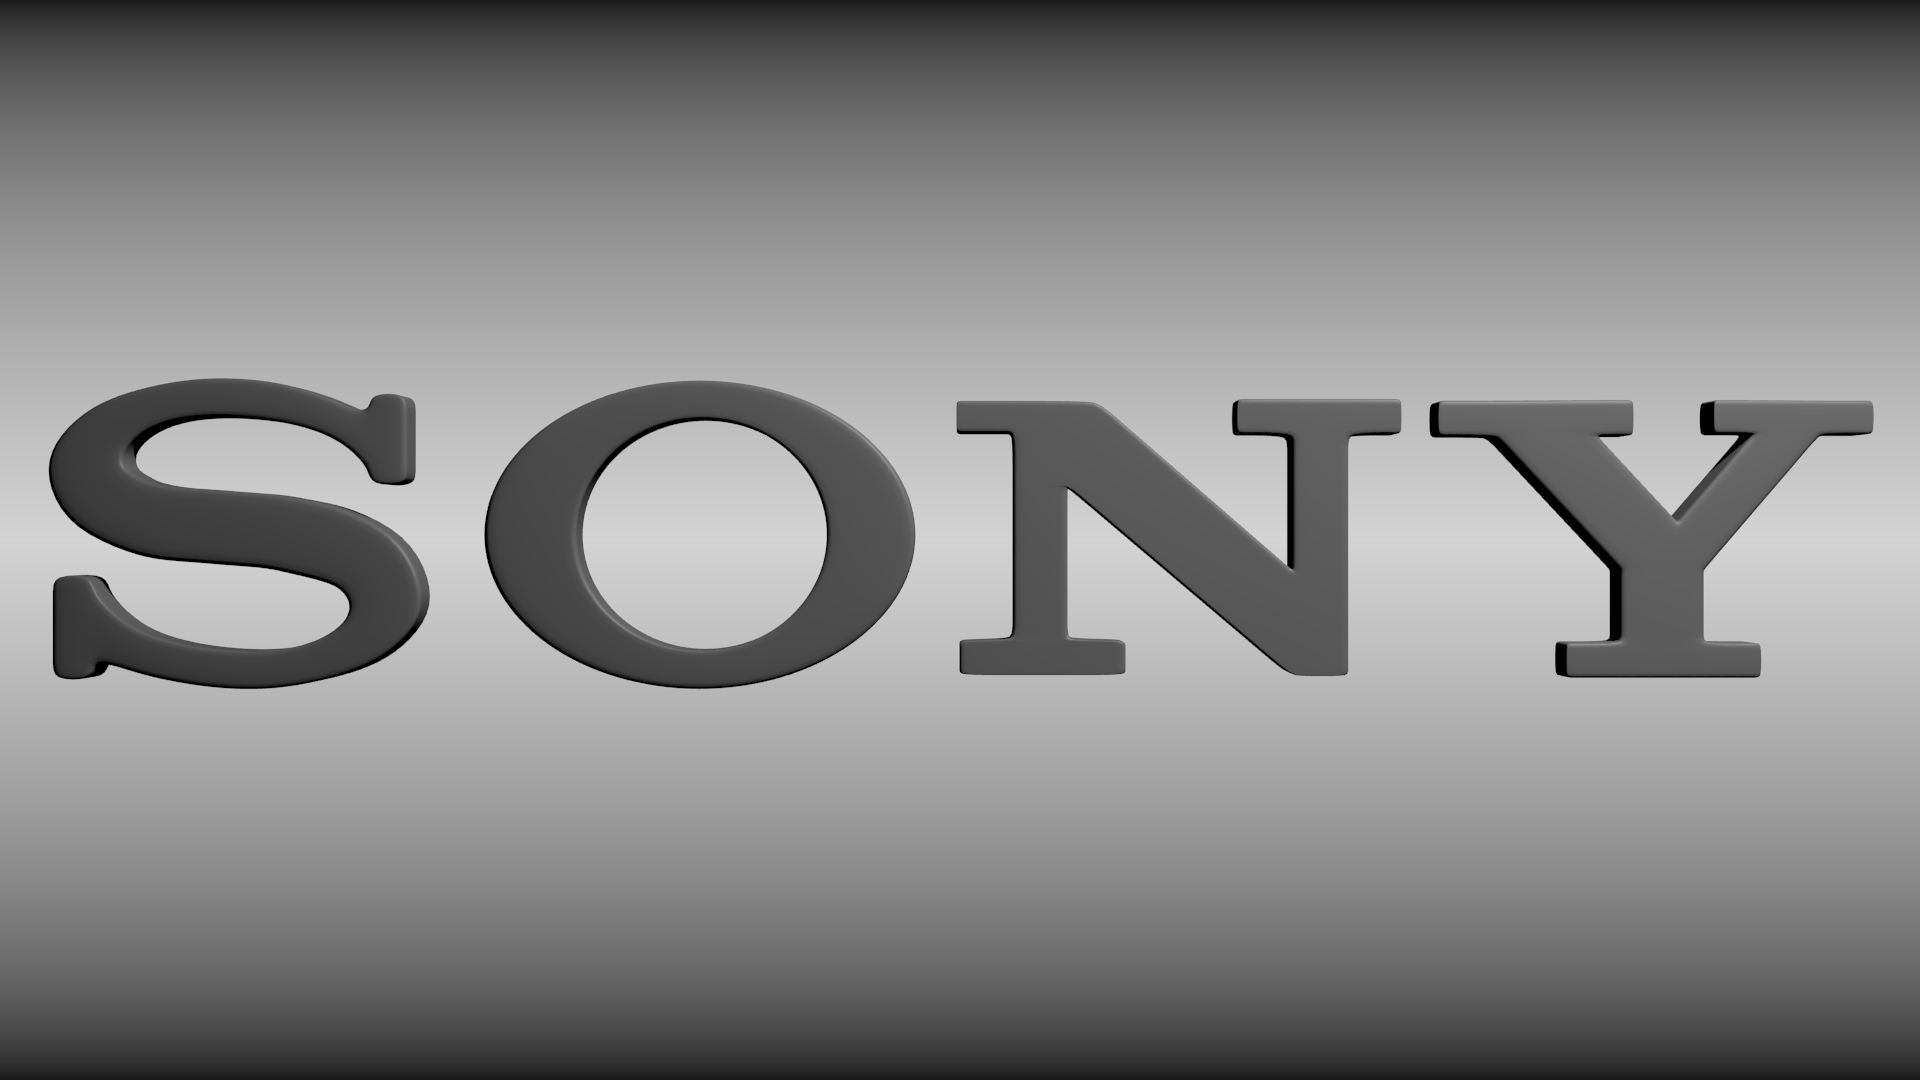 Sony Logo Wallpapers